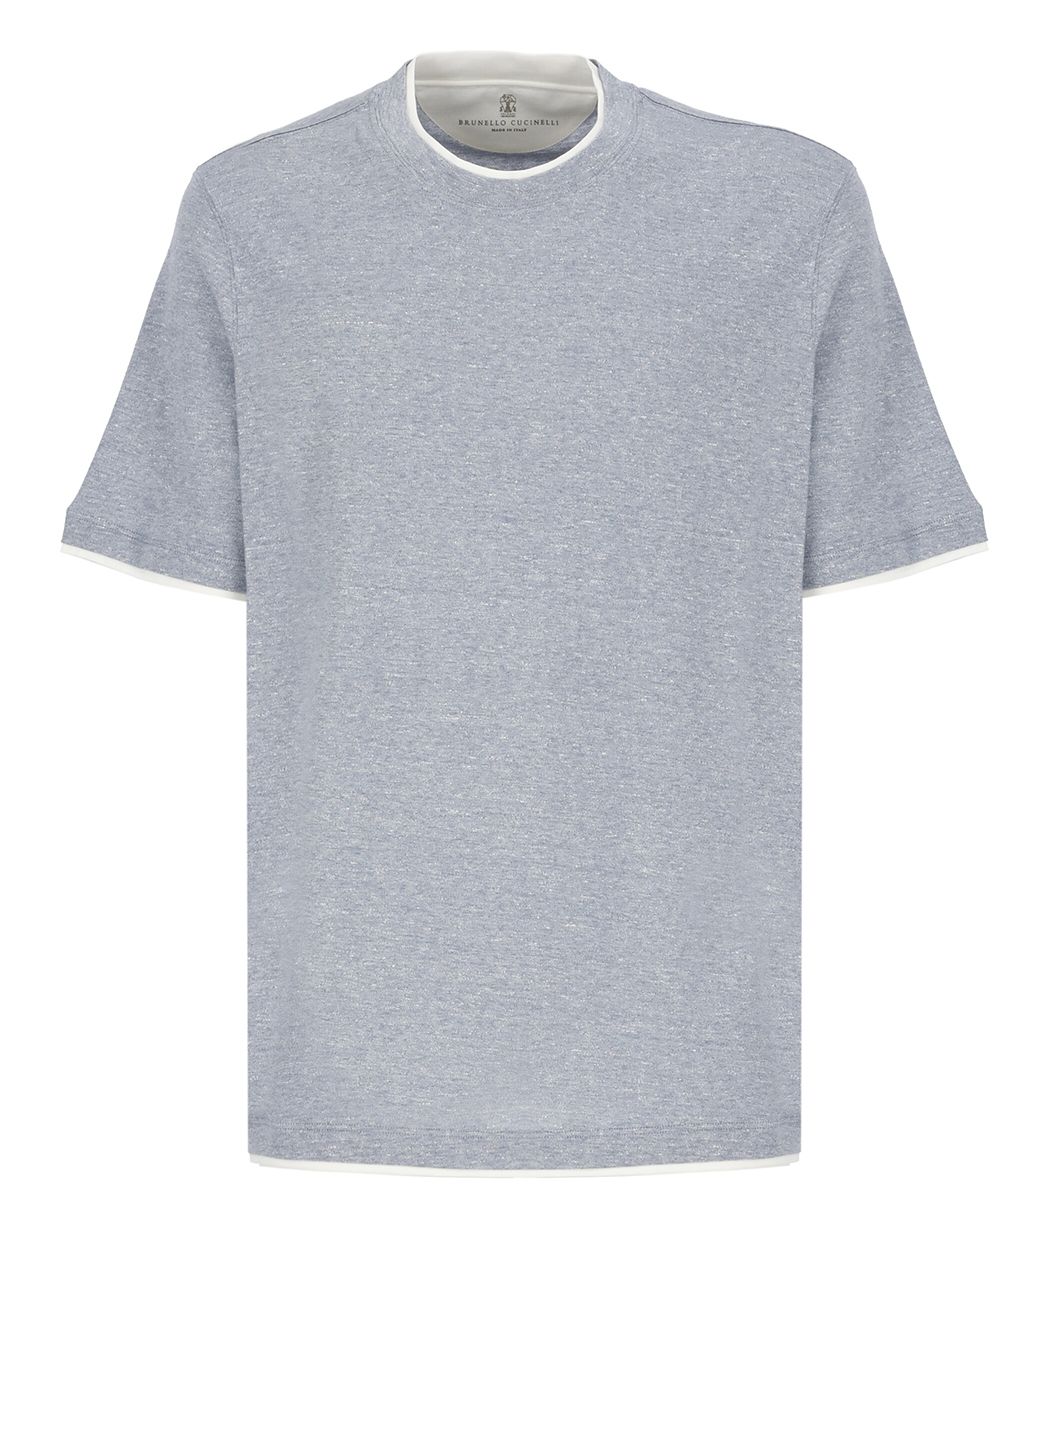 Cotton and linen t-shirt